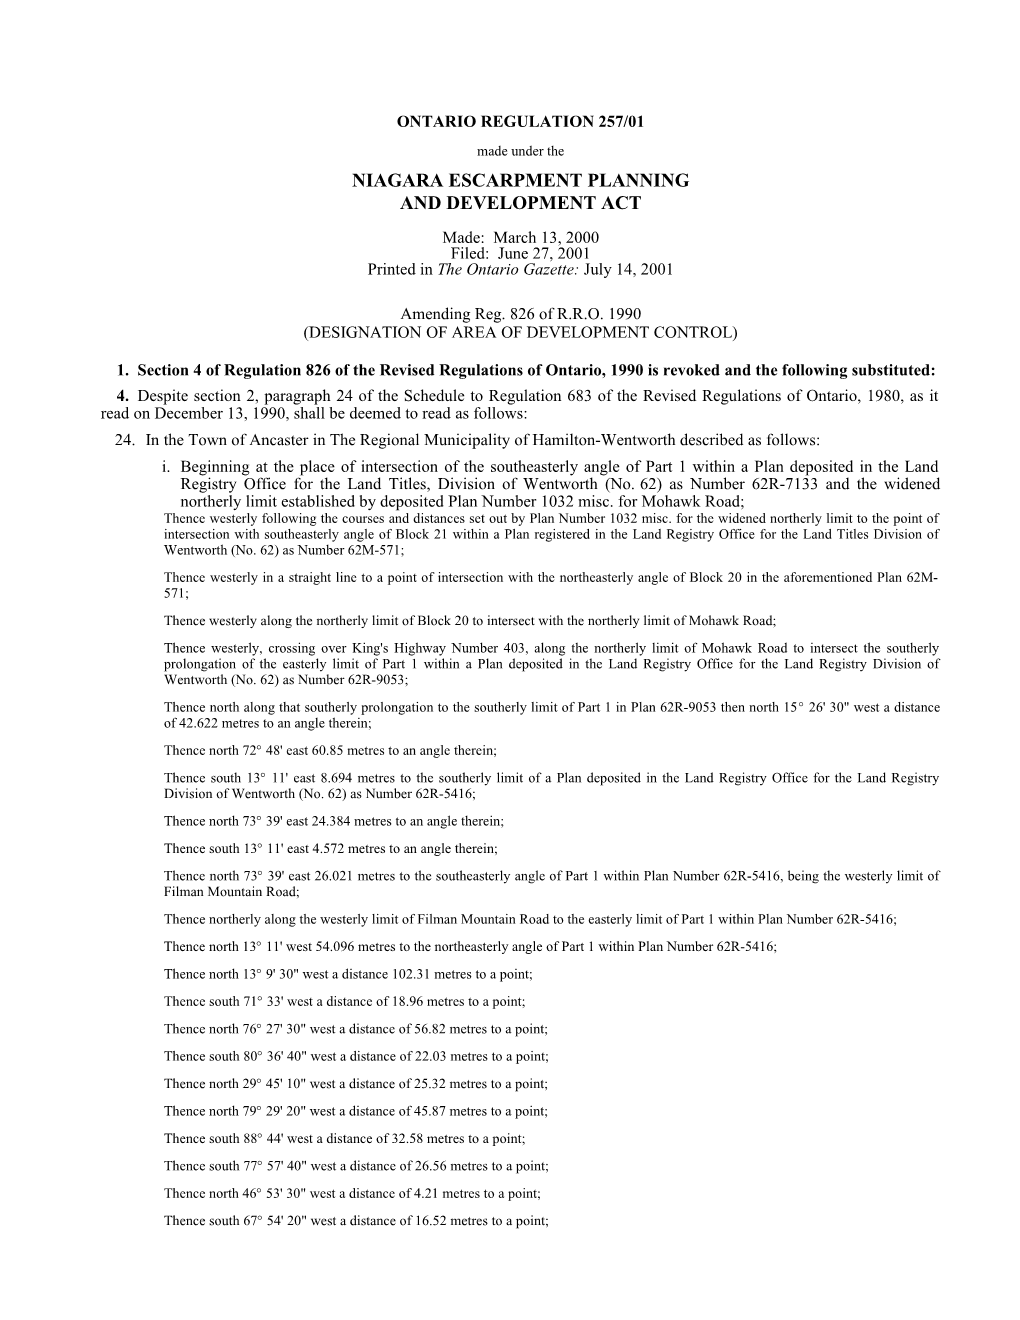 NIAGARA ESCARPMENT PLANNING and DEVELOPMENT ACT - O. Reg. 257/01